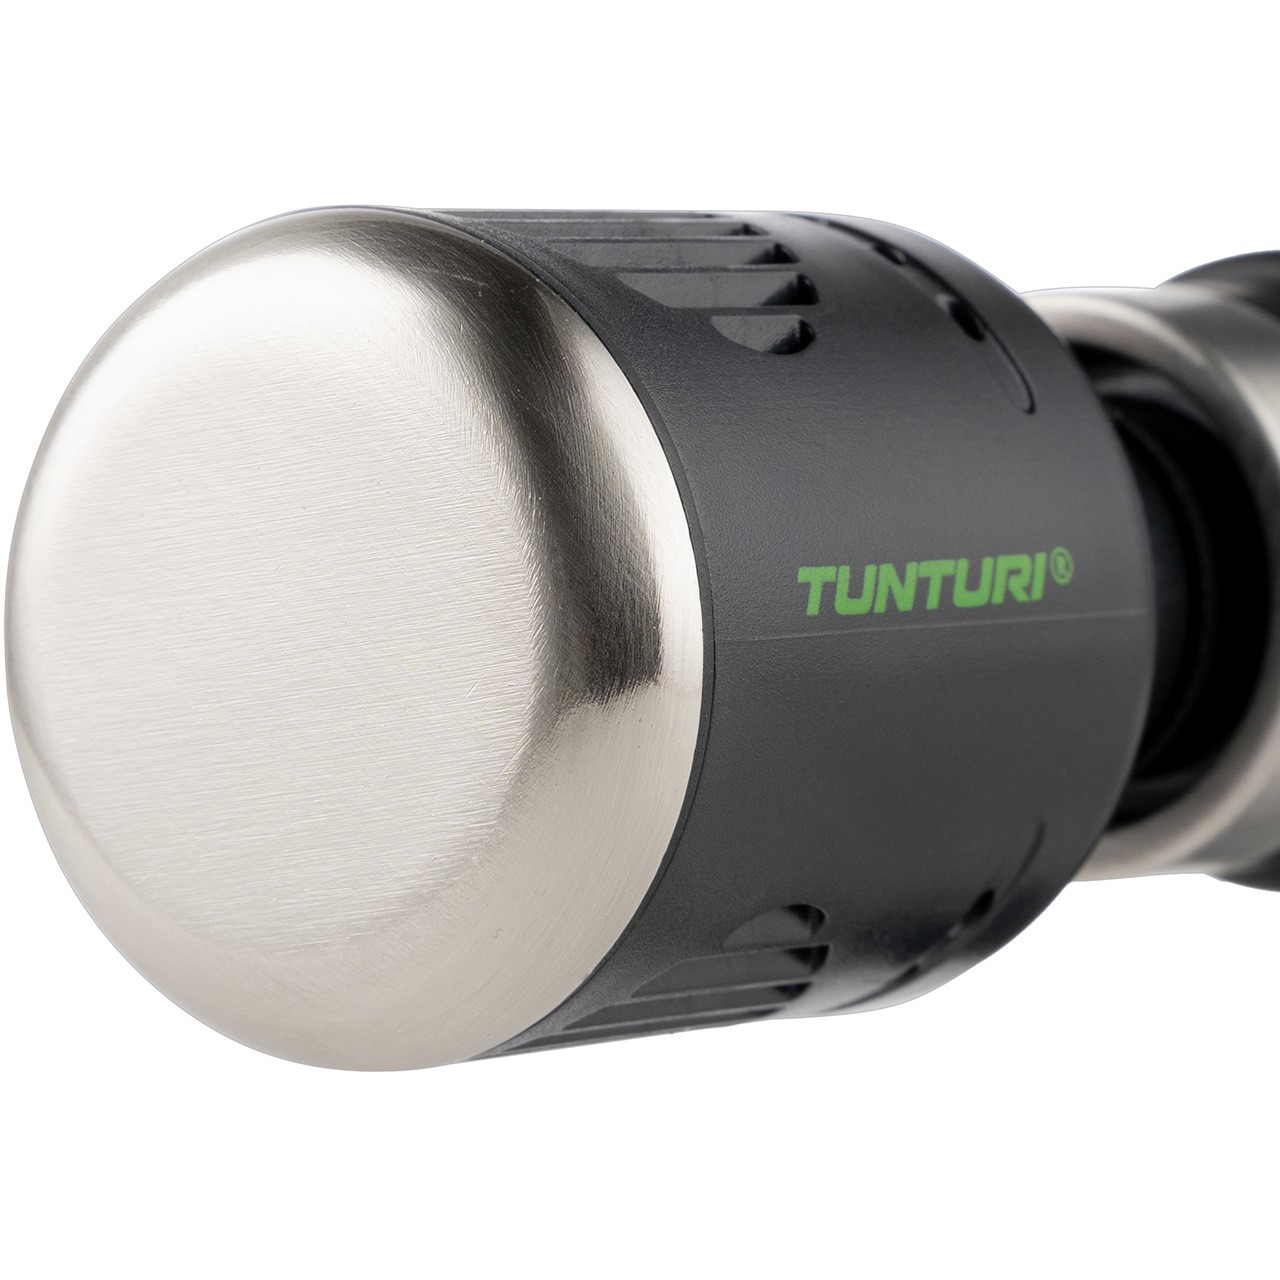 Tunturi Head for Massage Gun, Heat and Cool